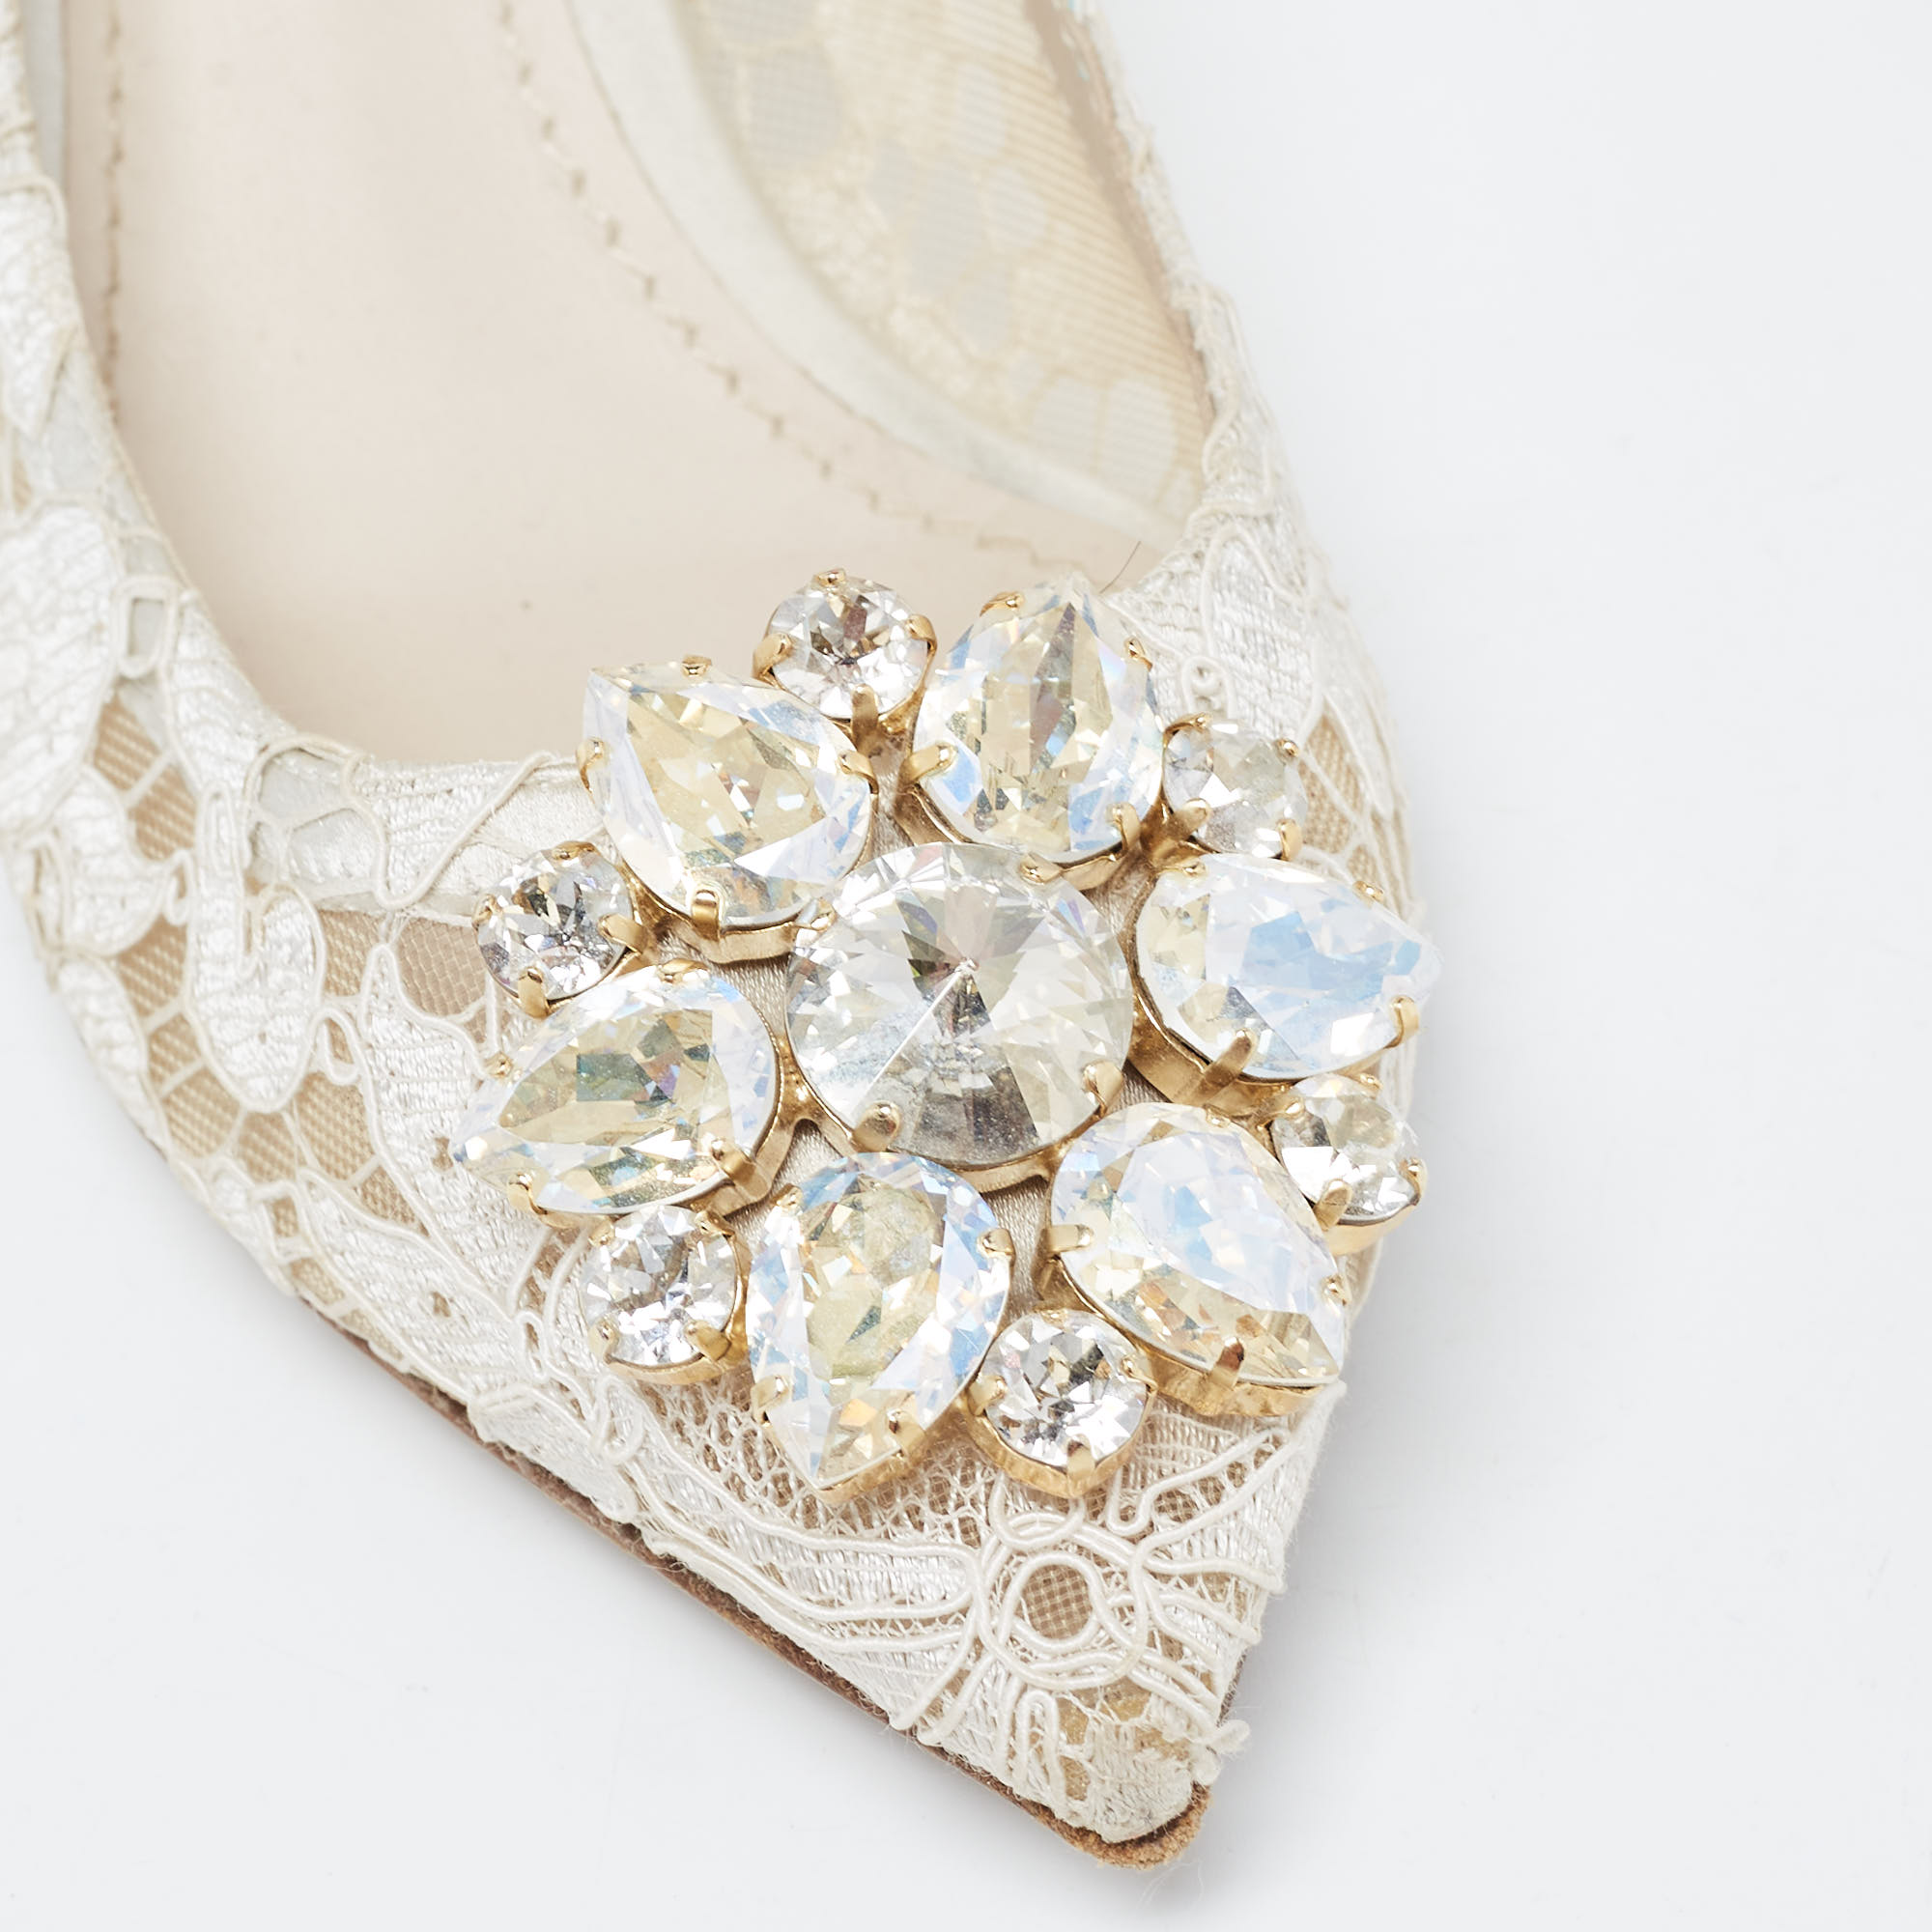 Dolce & Gabbana White Lace Crystal Embellished Taormina Pumps Size 36.5